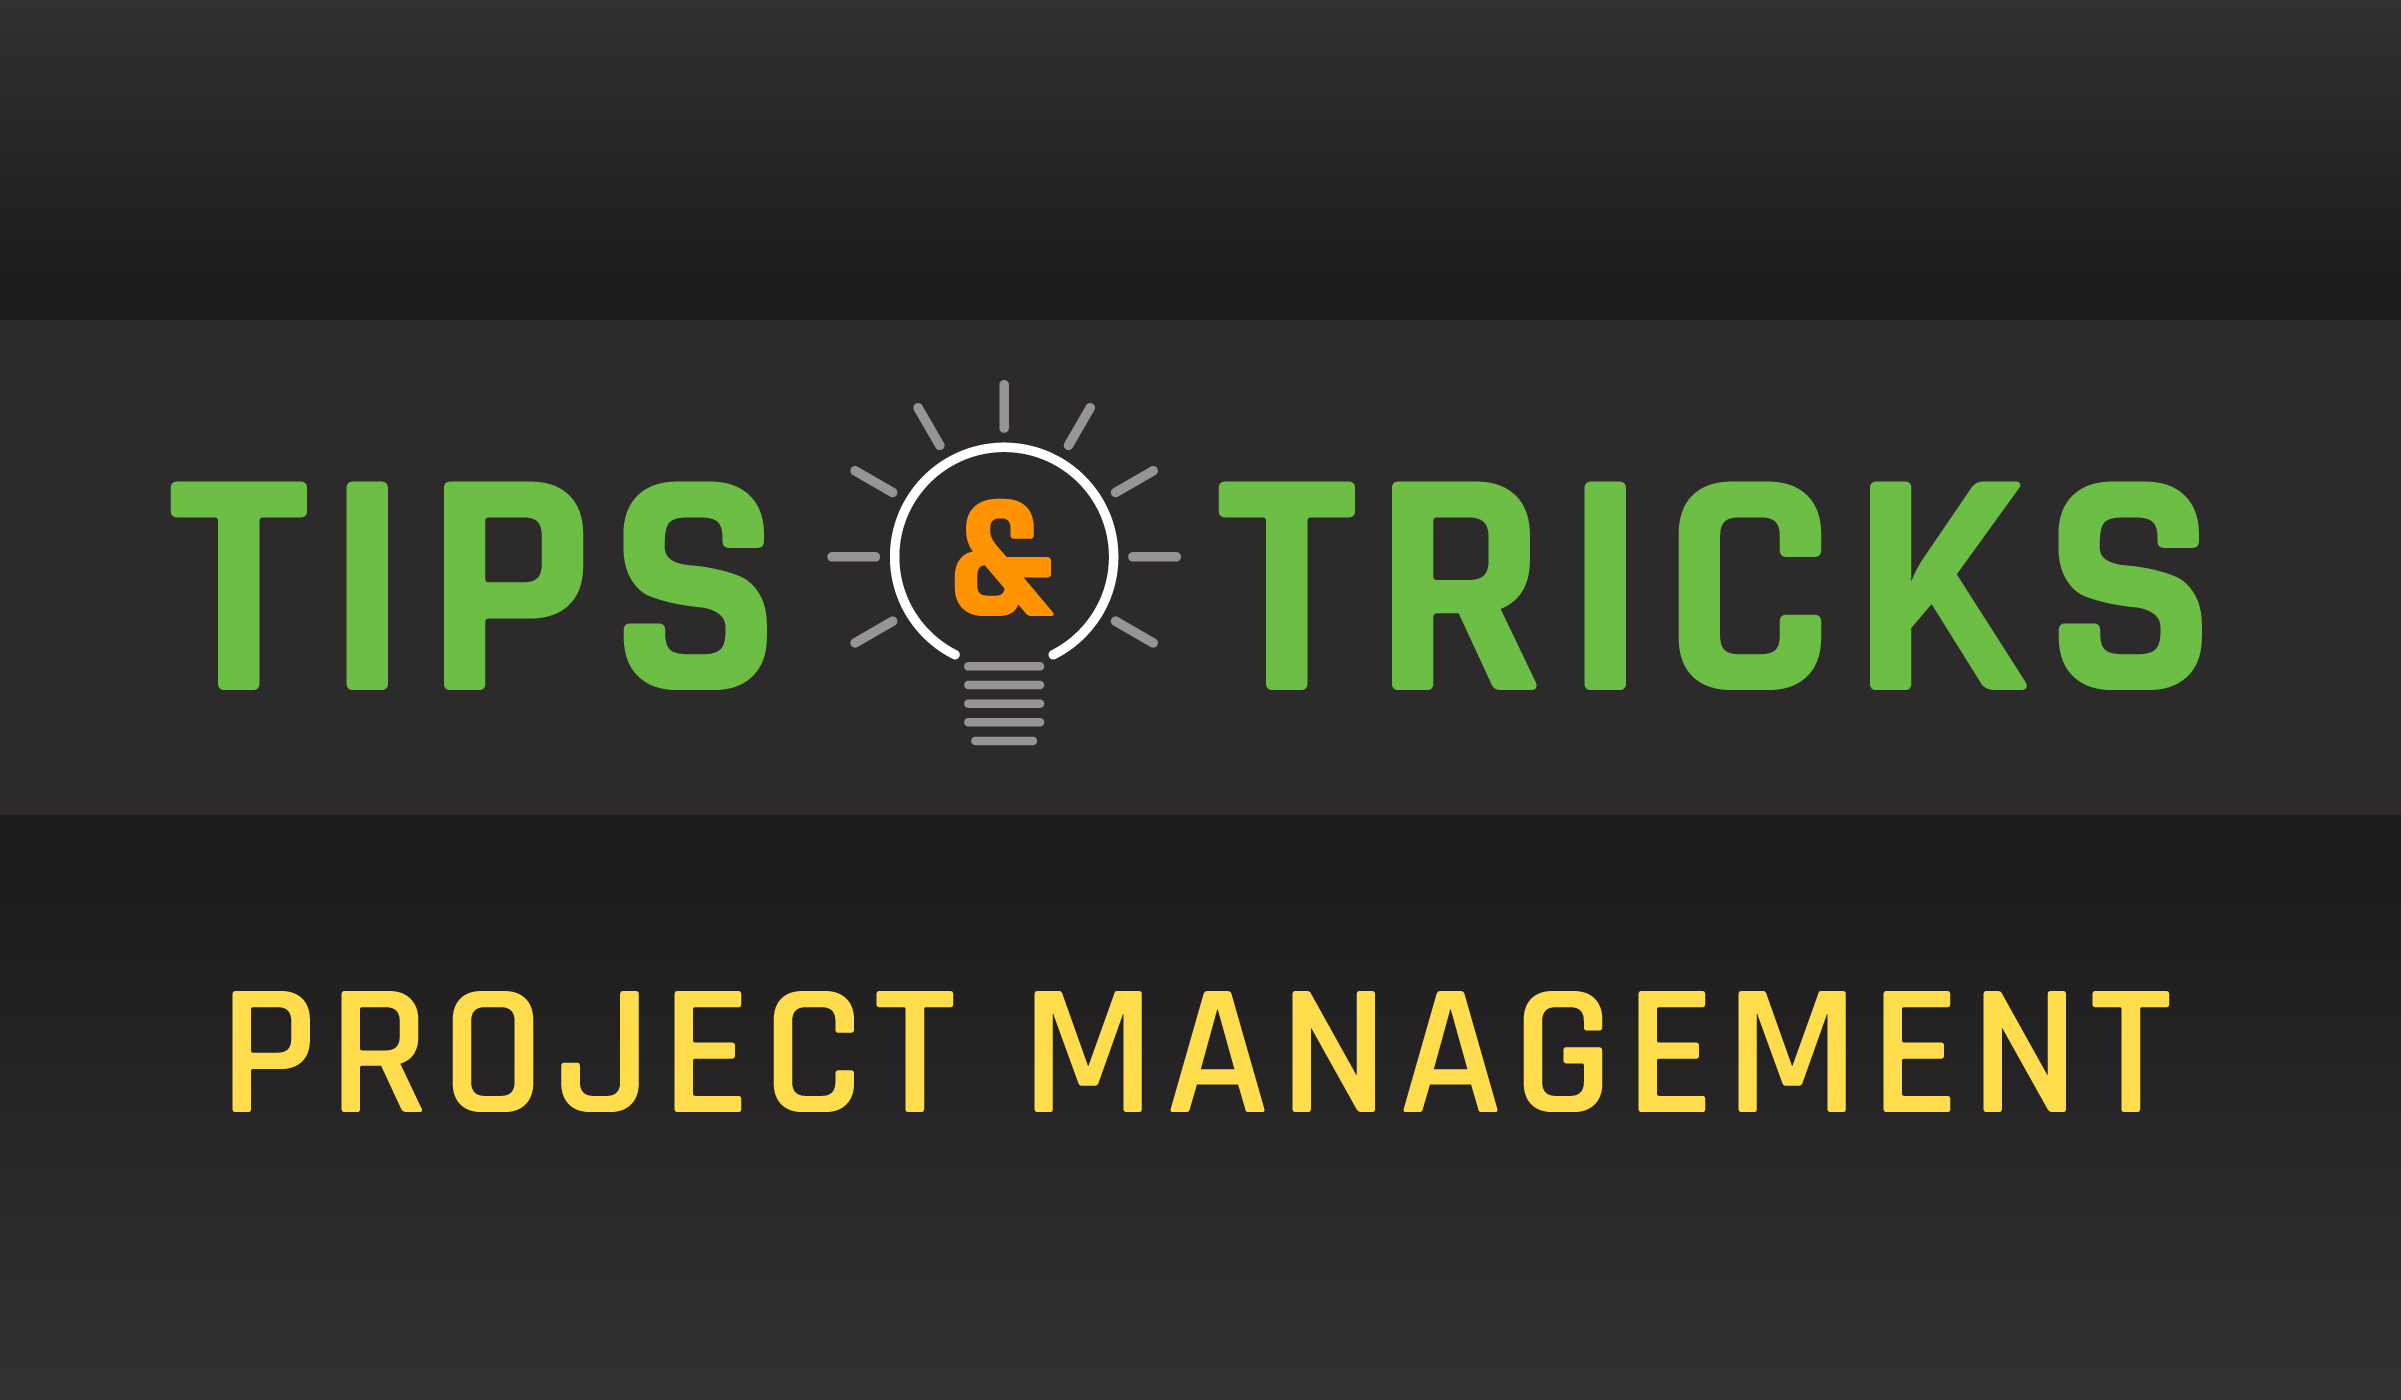 Tips & Tricks Project Management